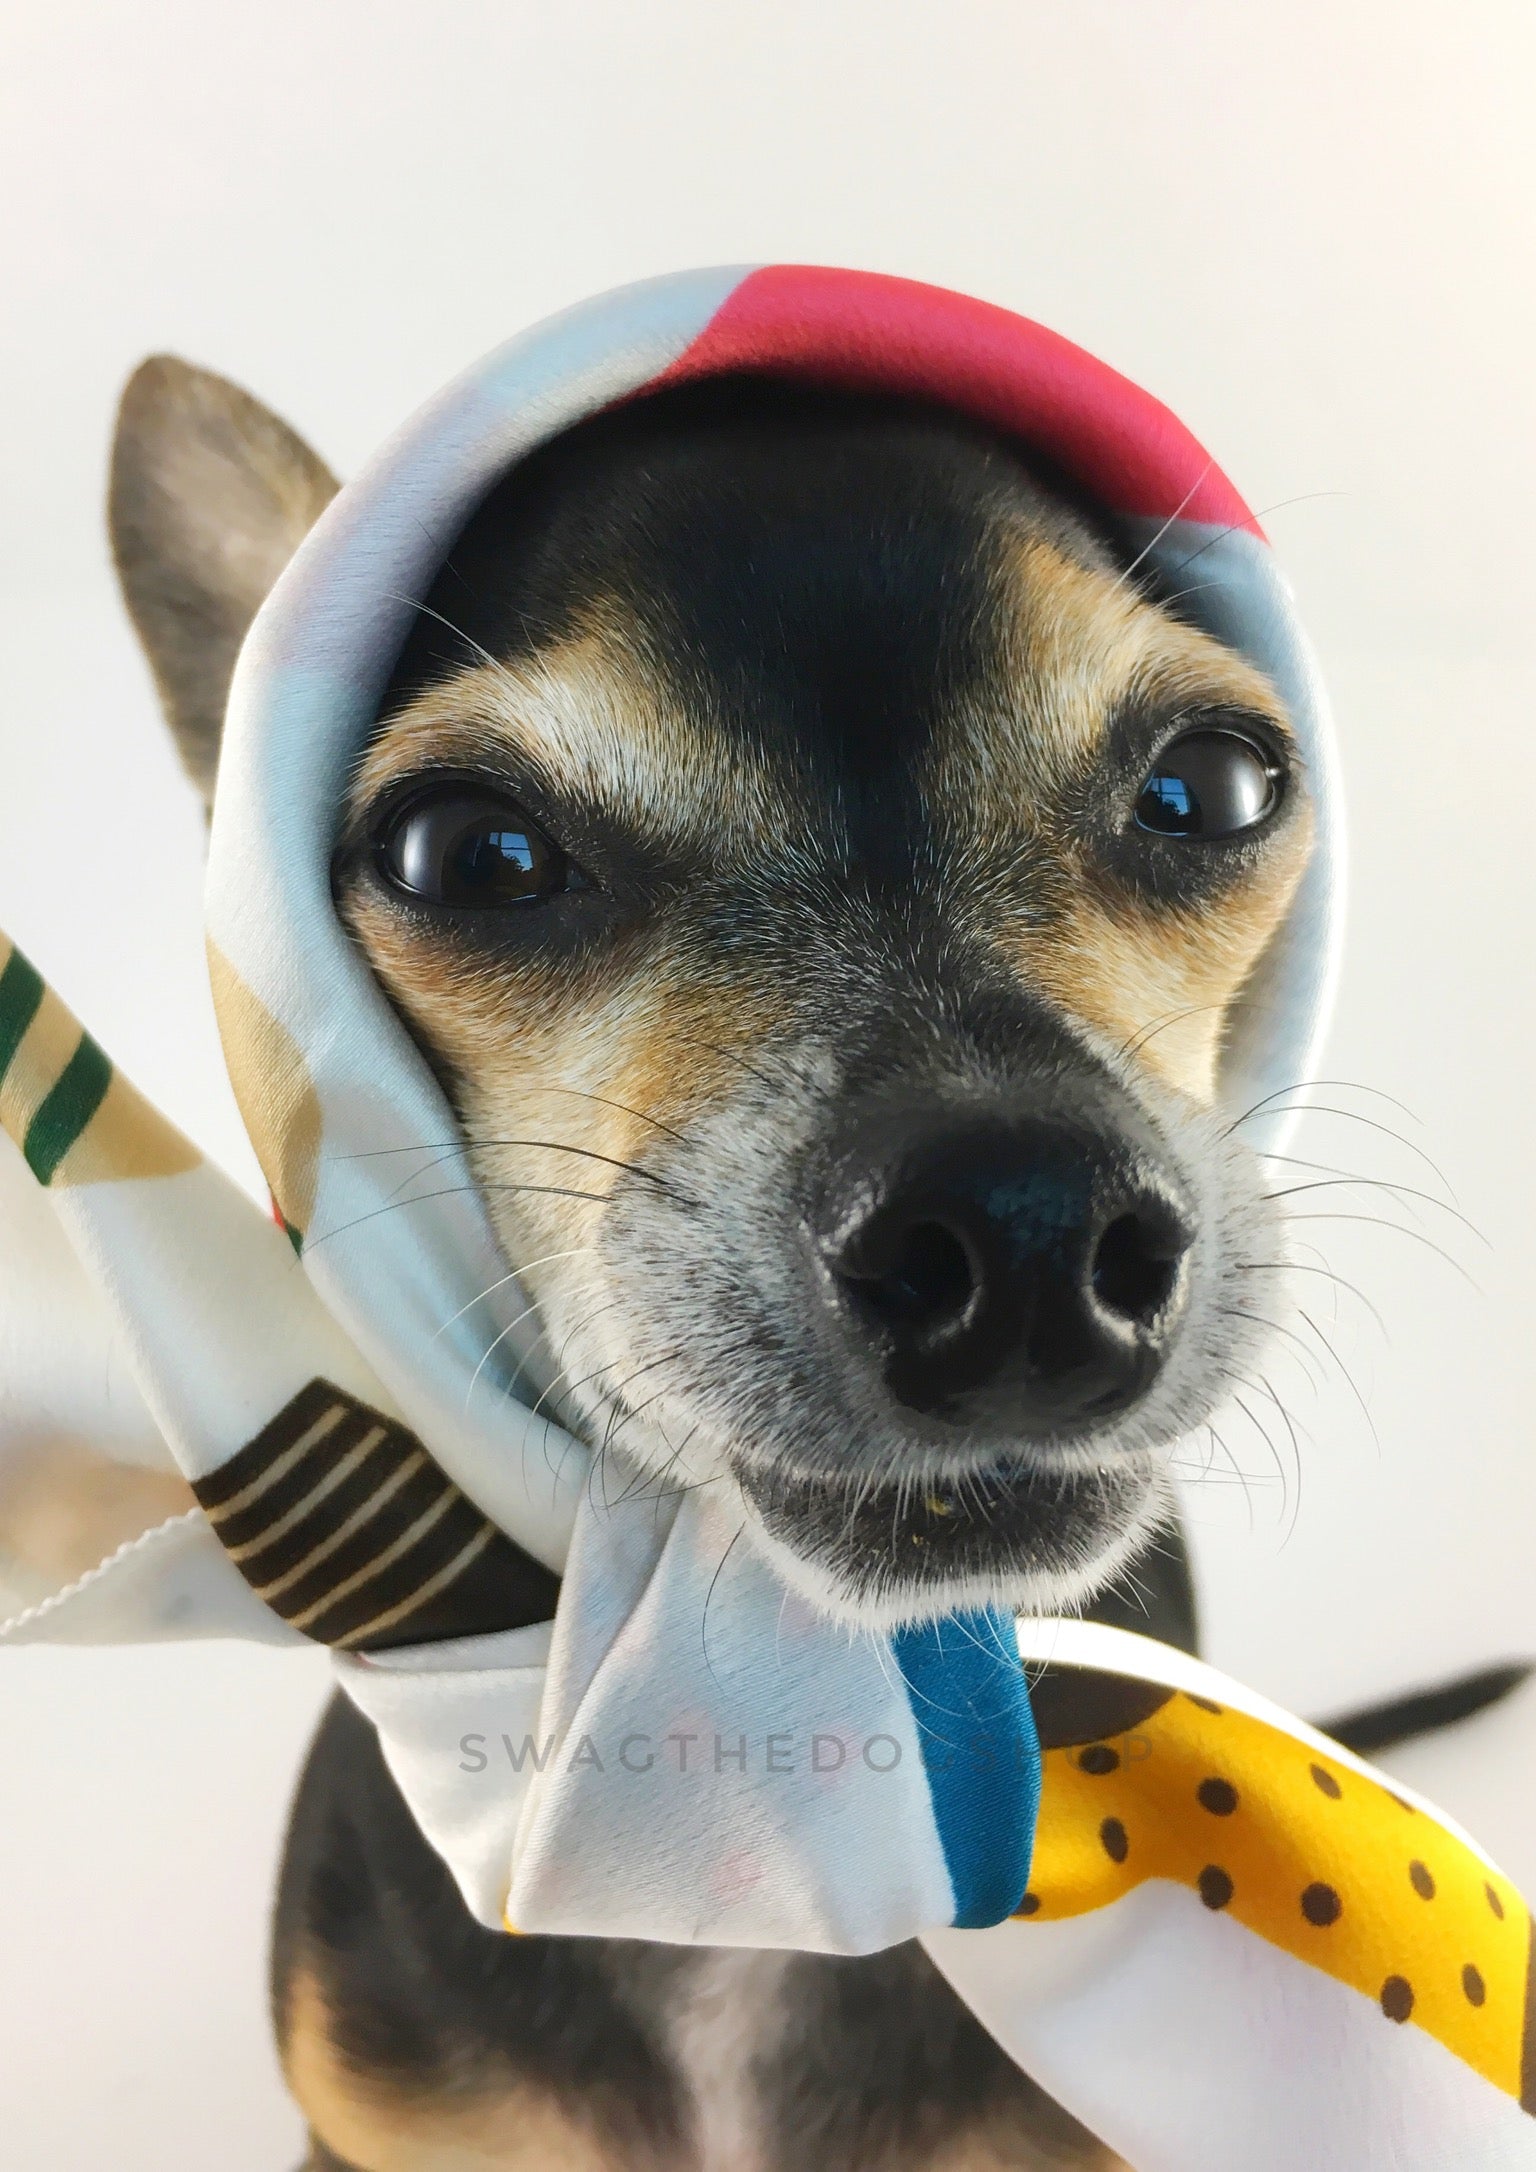 Rock Your Socks Swagdana Scarf - Bust of Cute Chihuahua Wearing Swagdana Scarf as Headscarf. Dog Bandana. Dog Scarf.